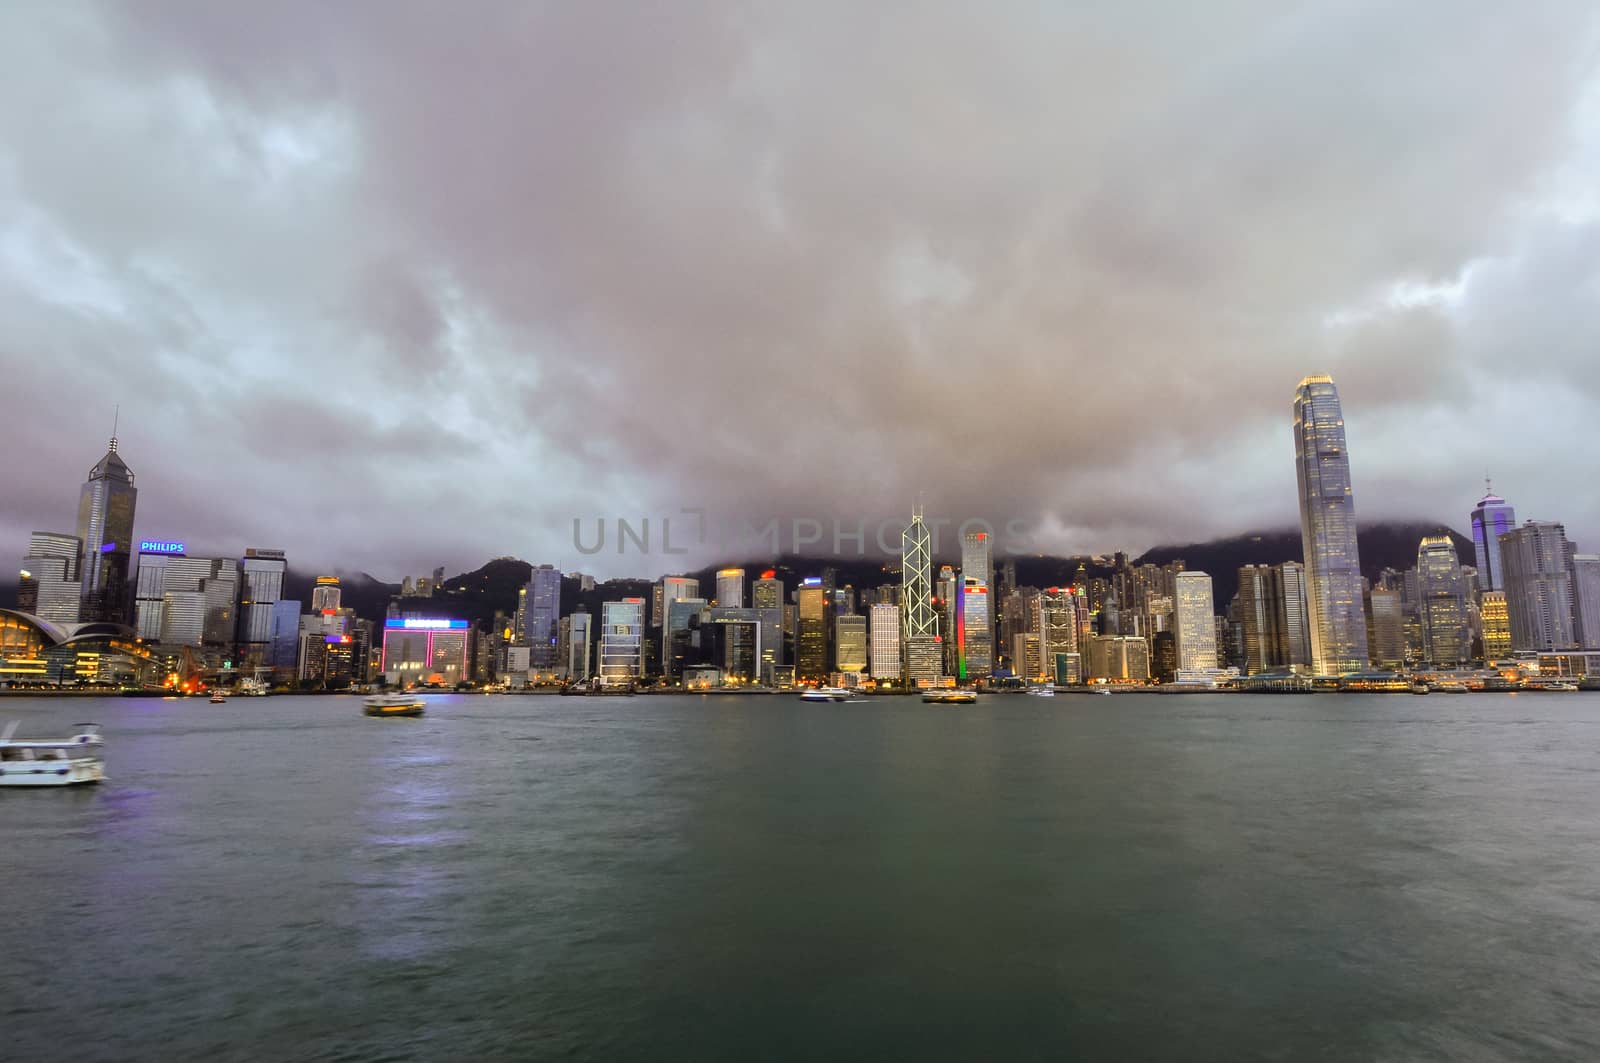 Hong Kong Island Skyline from Kowloon. by weltreisendertj